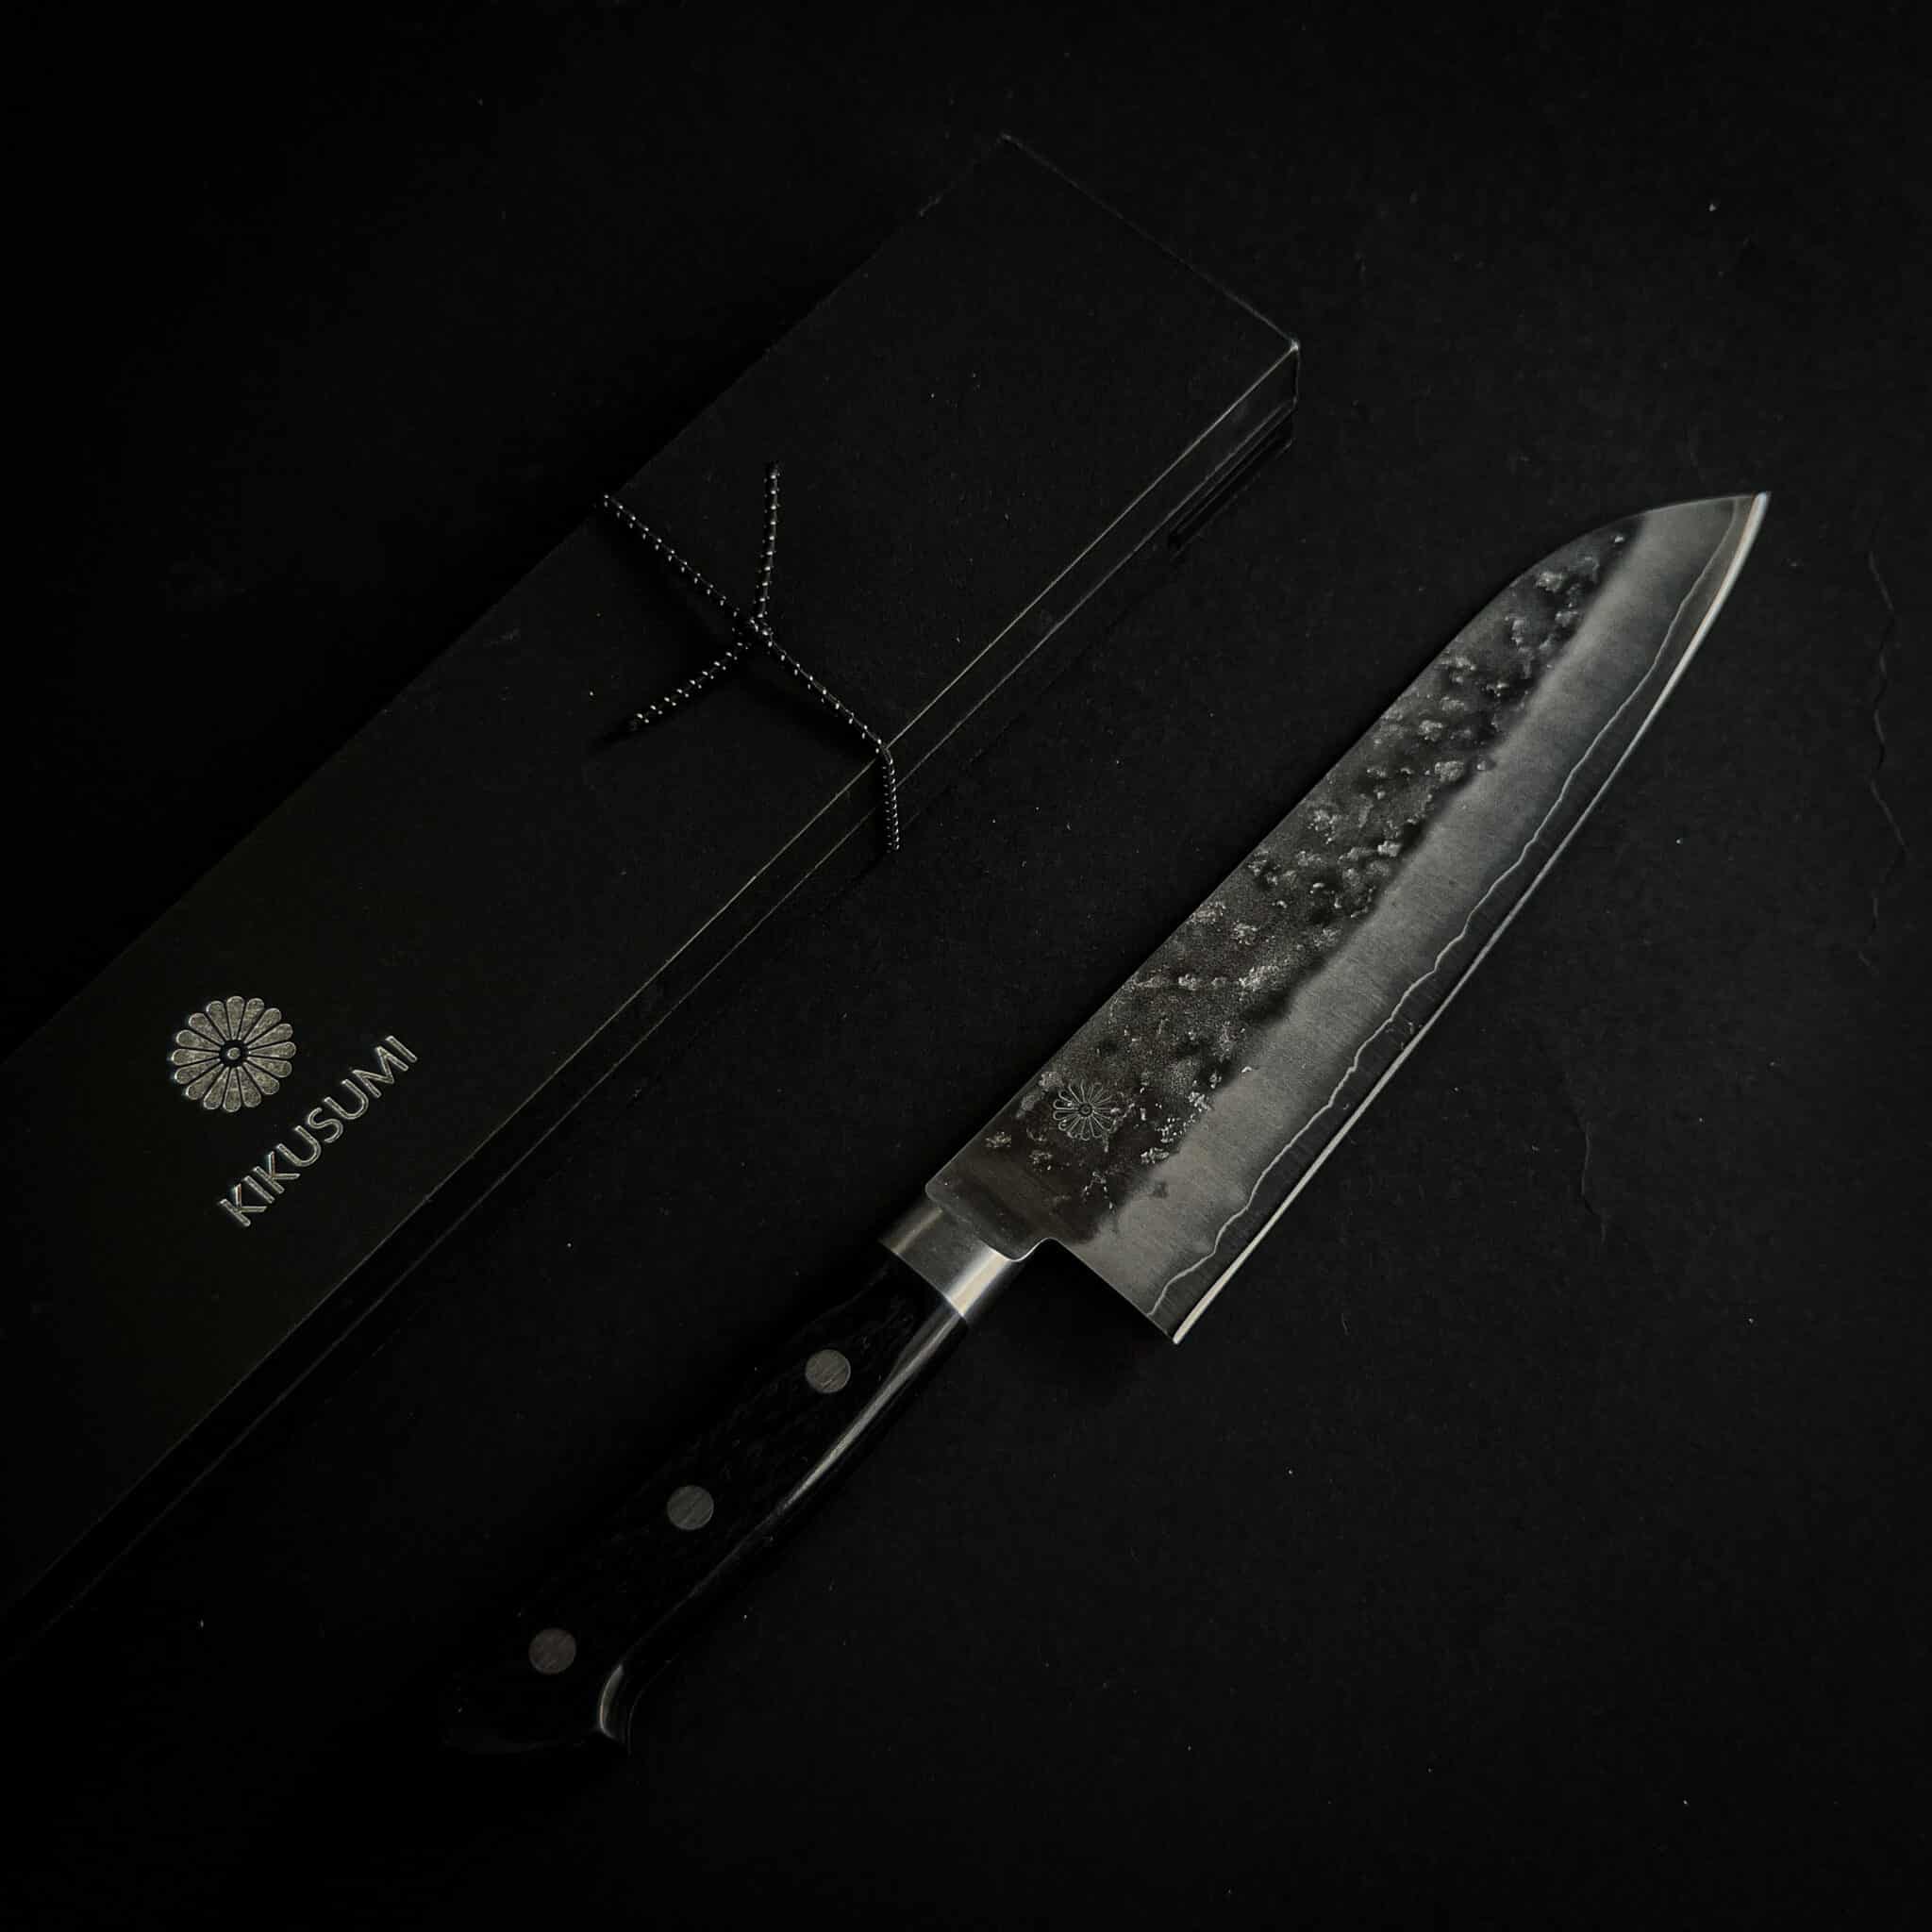 Shadow Black Kitchen Knives